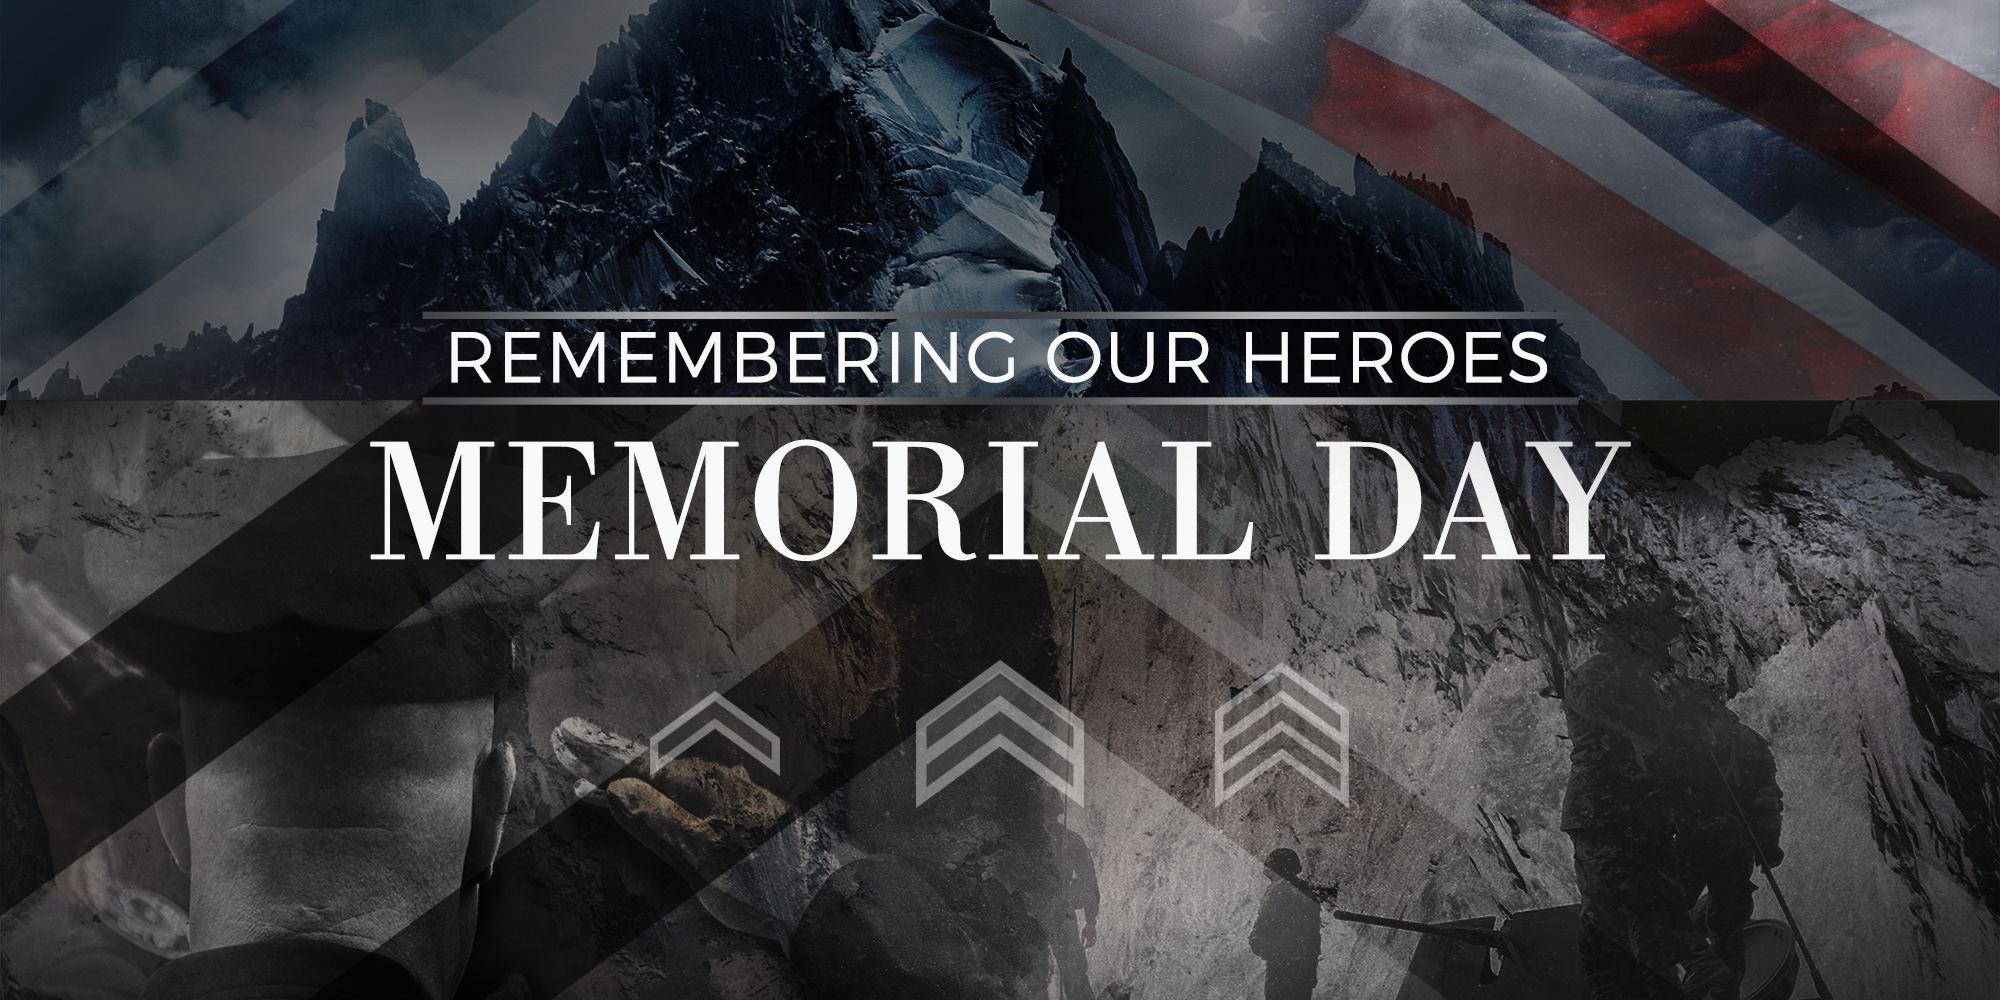 Remembering Our Heros, Happy Memorial Day